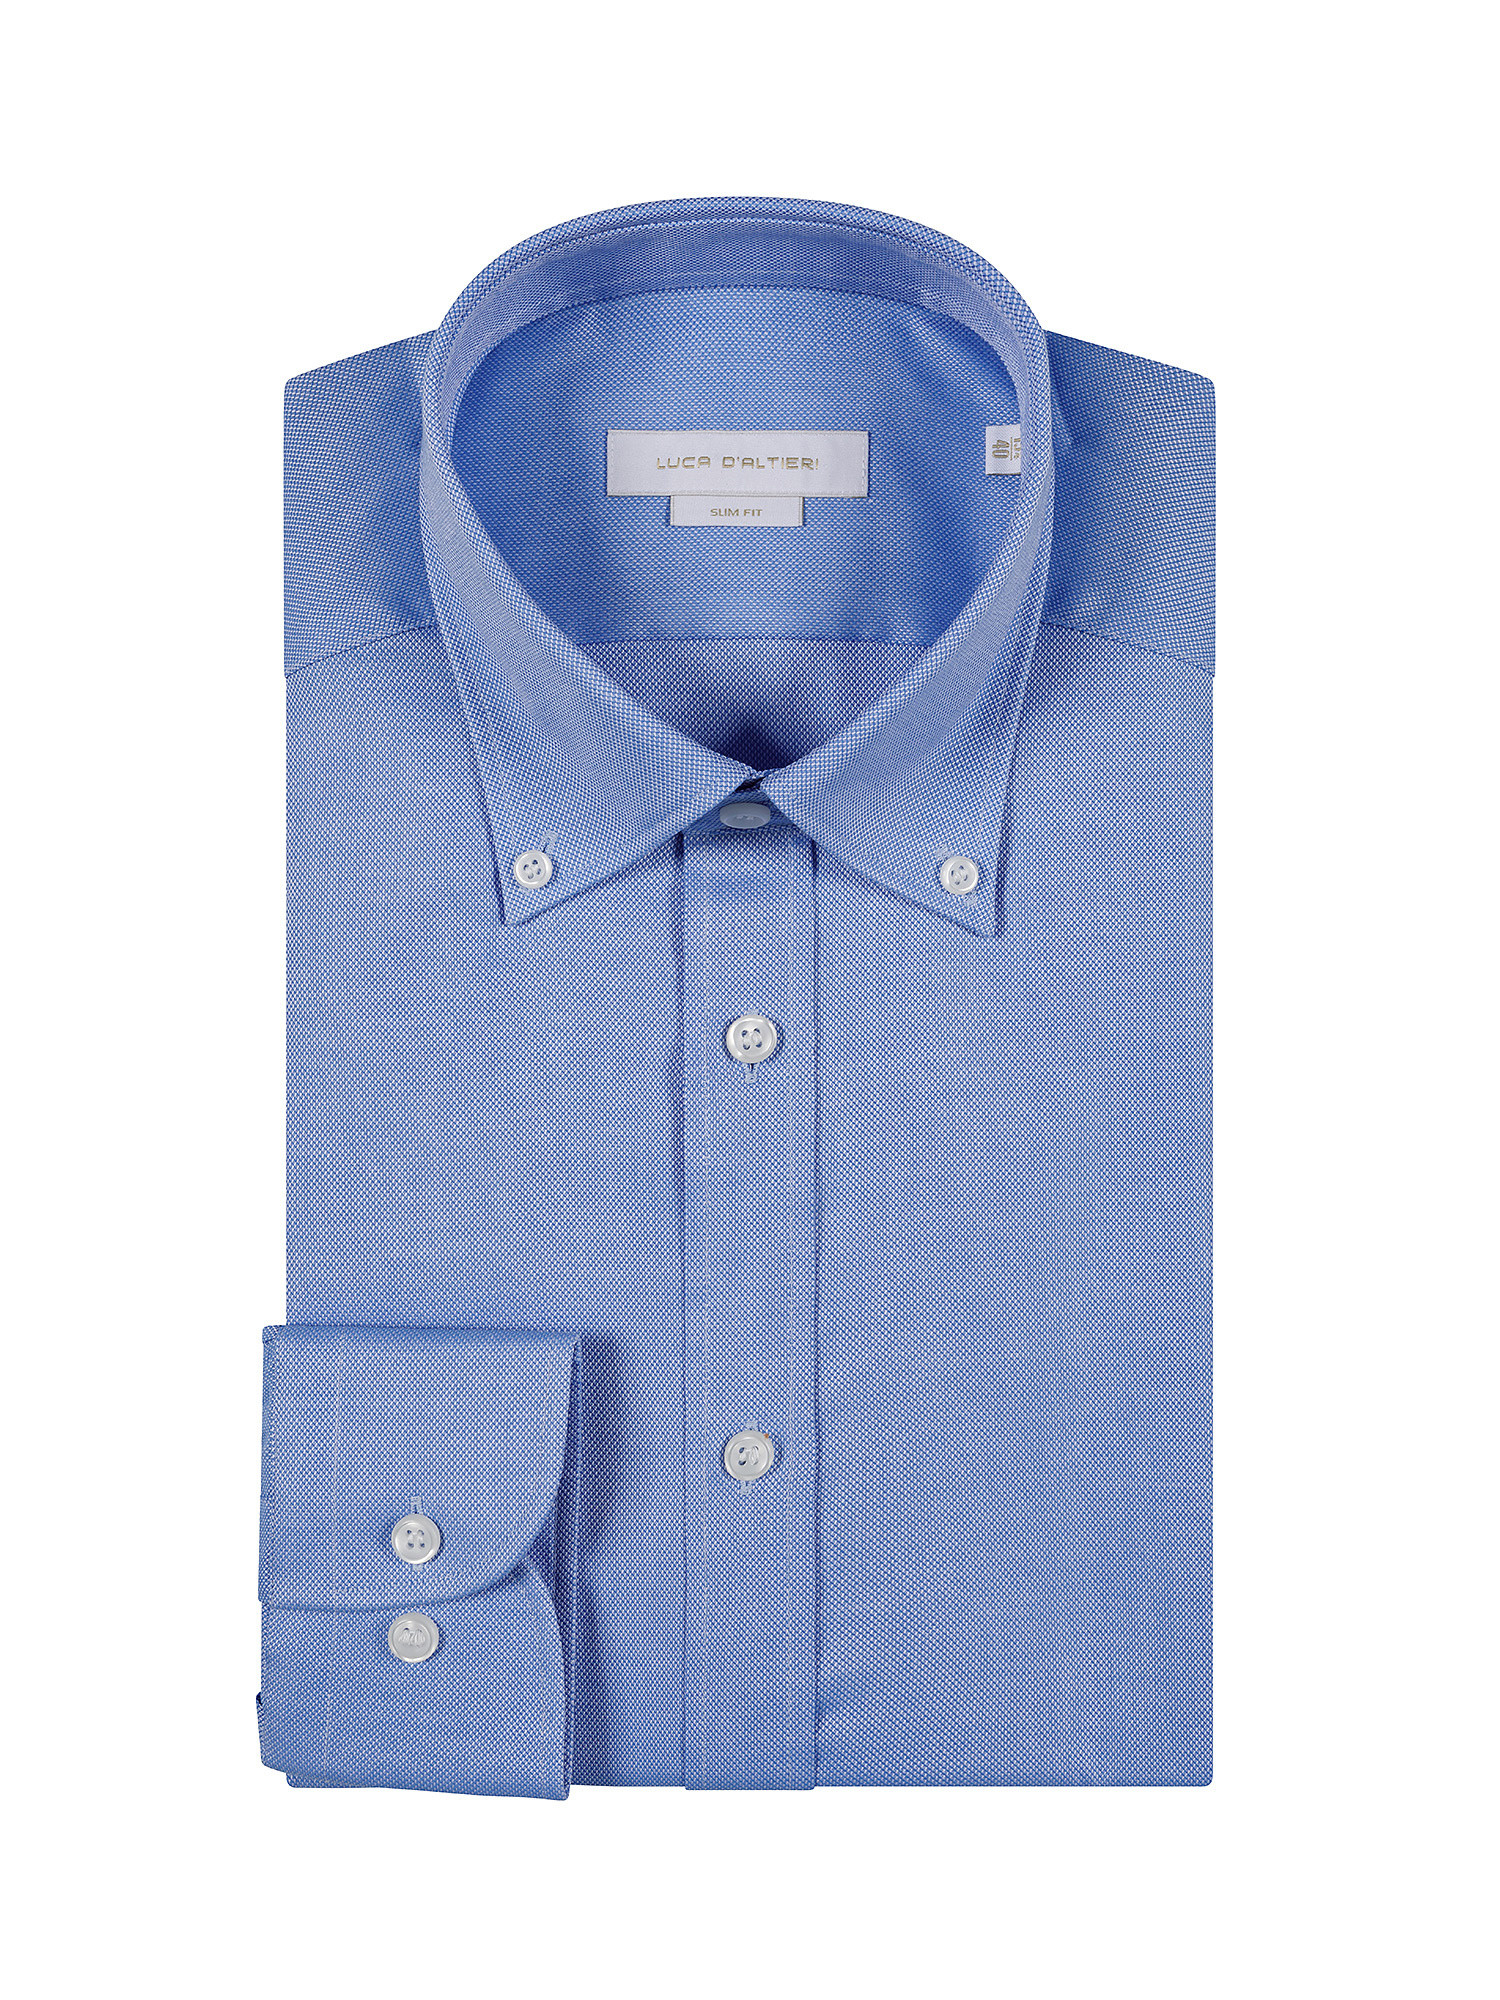 Camicia slim fit cotone oxford, Azzurro, large image number 2